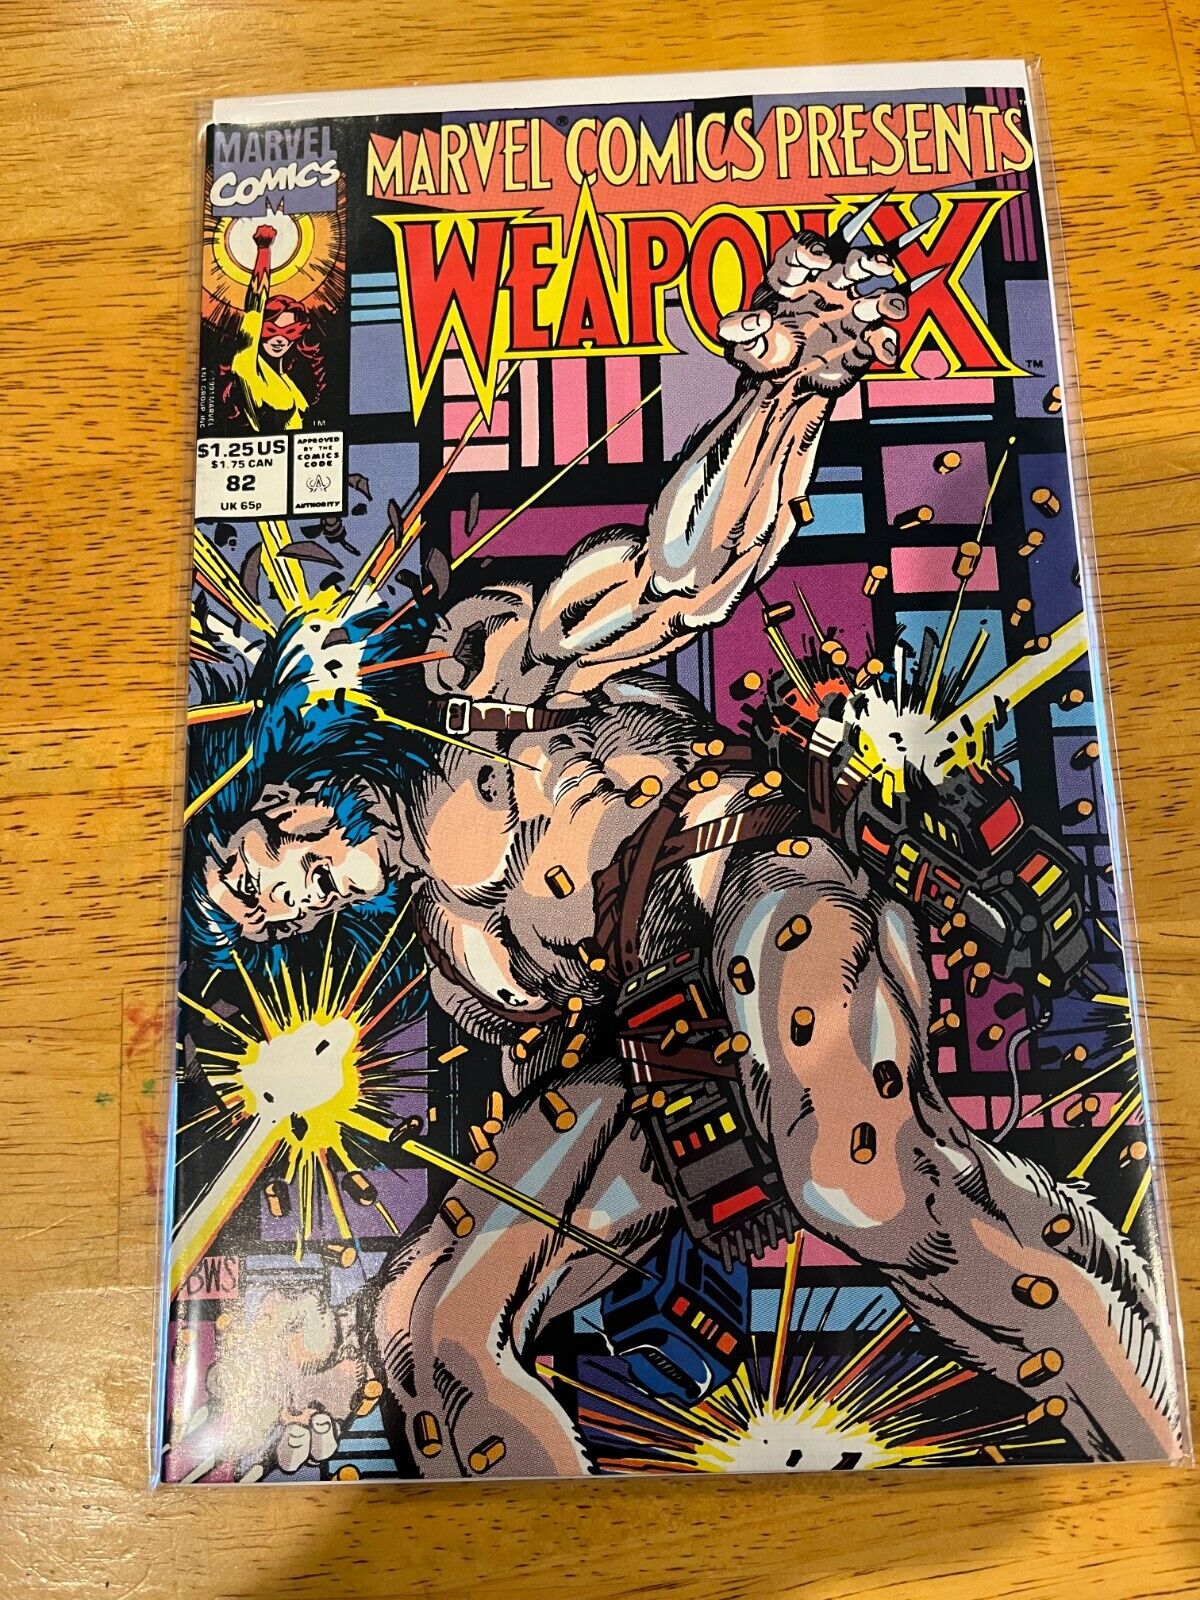 Marvel Comics Presents Weapon X #82 Marvel Comics 1991 Barry Windsor Smith